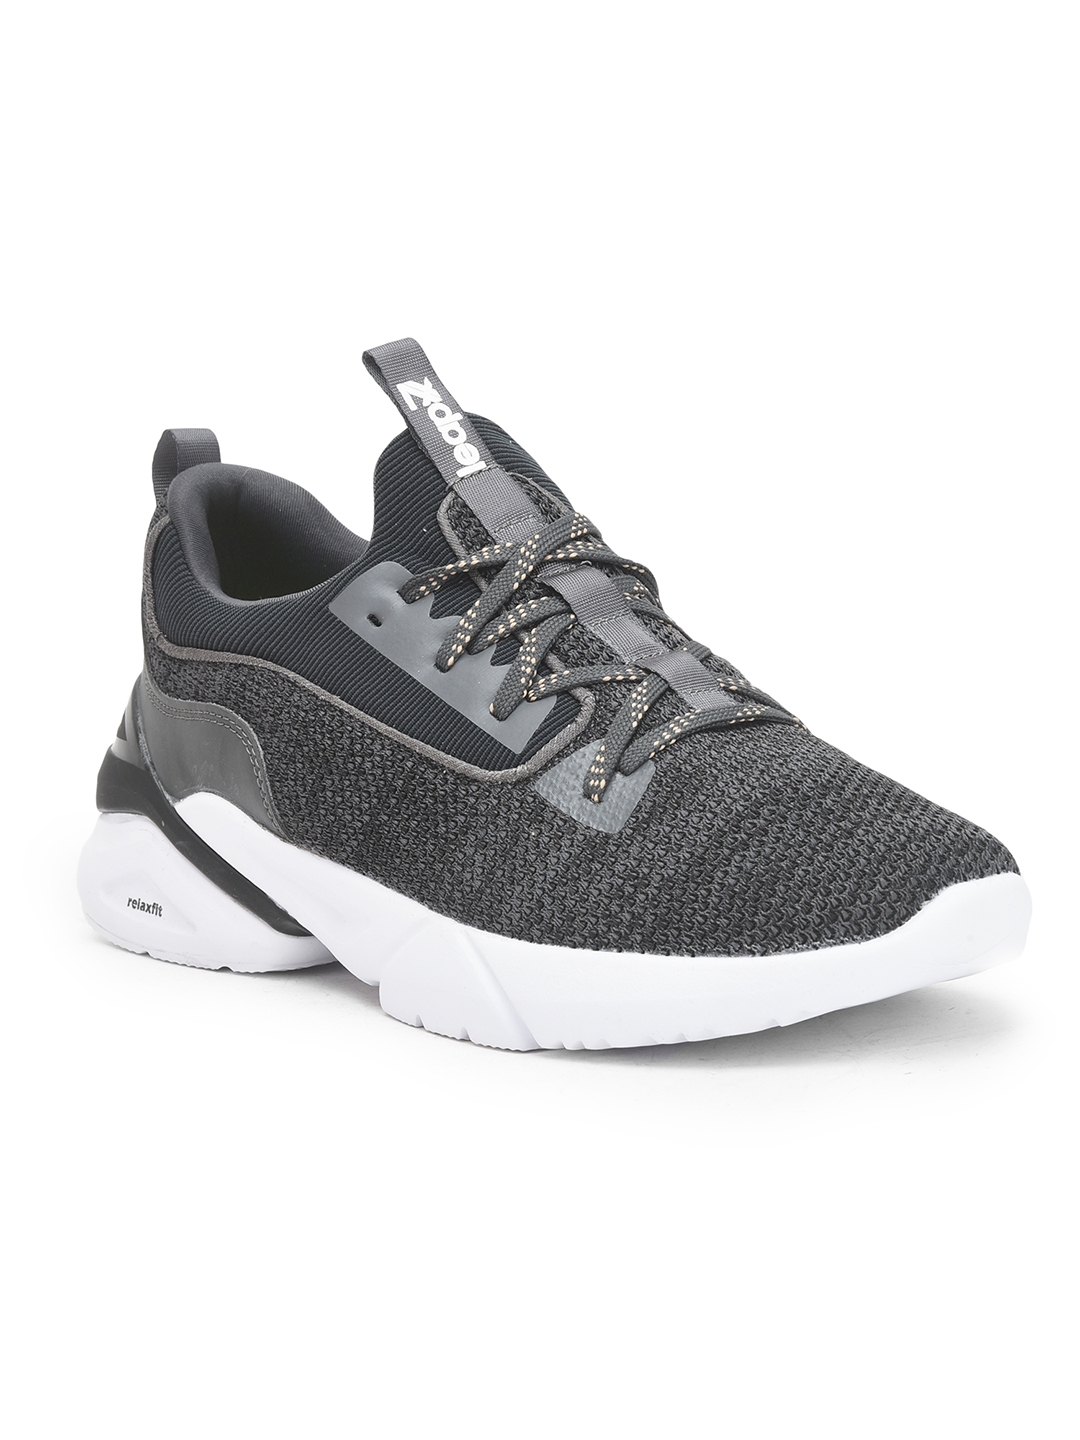 Men's LEAP7X Grey Running Shoes